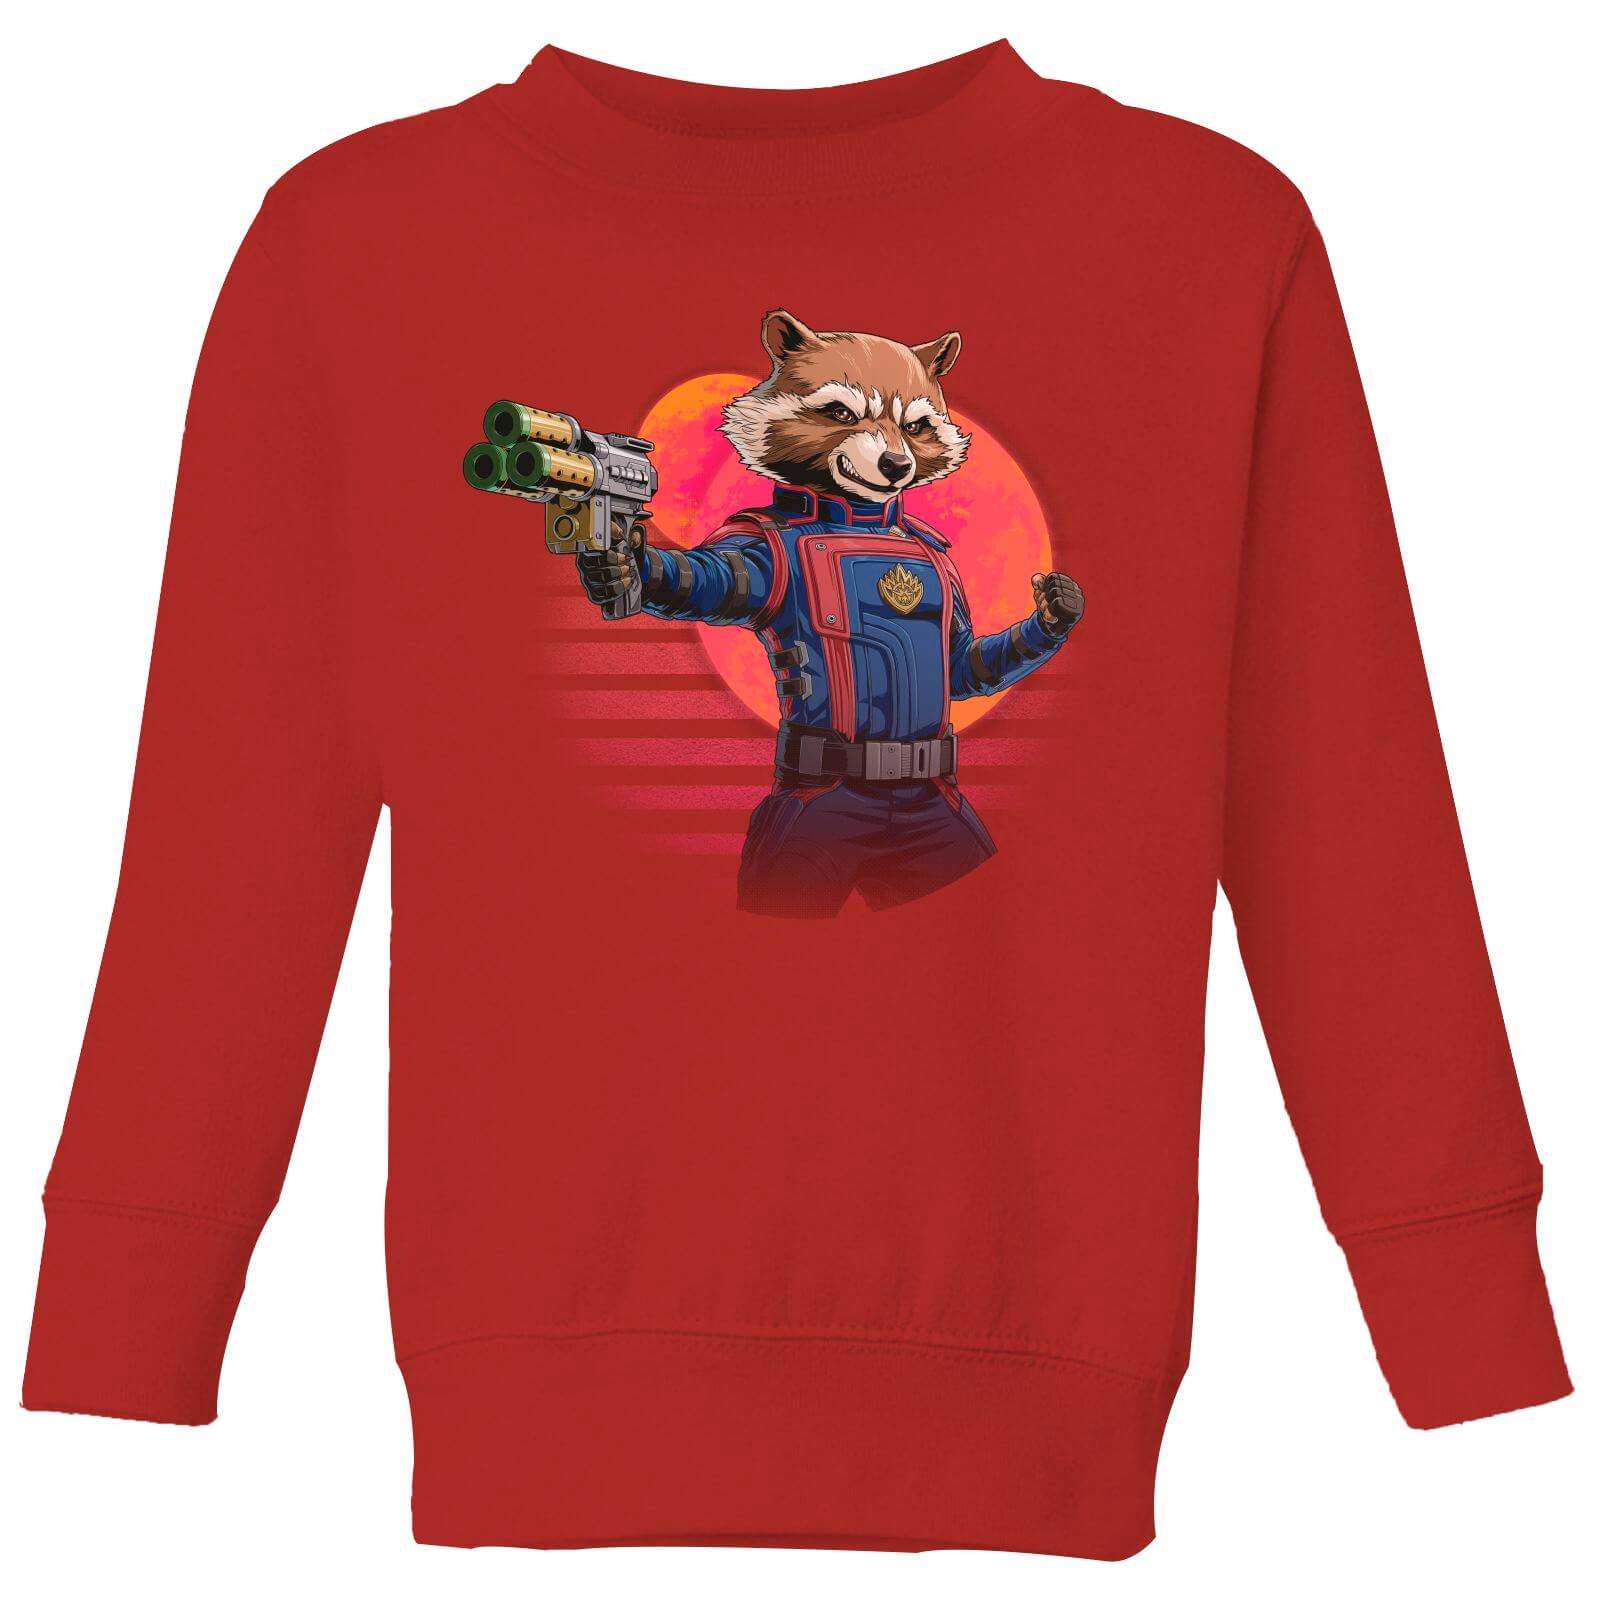 Guardians of the Galaxy Retro Rocket Raccoon Kids' Sweatshirt - Red - 11-12 ans